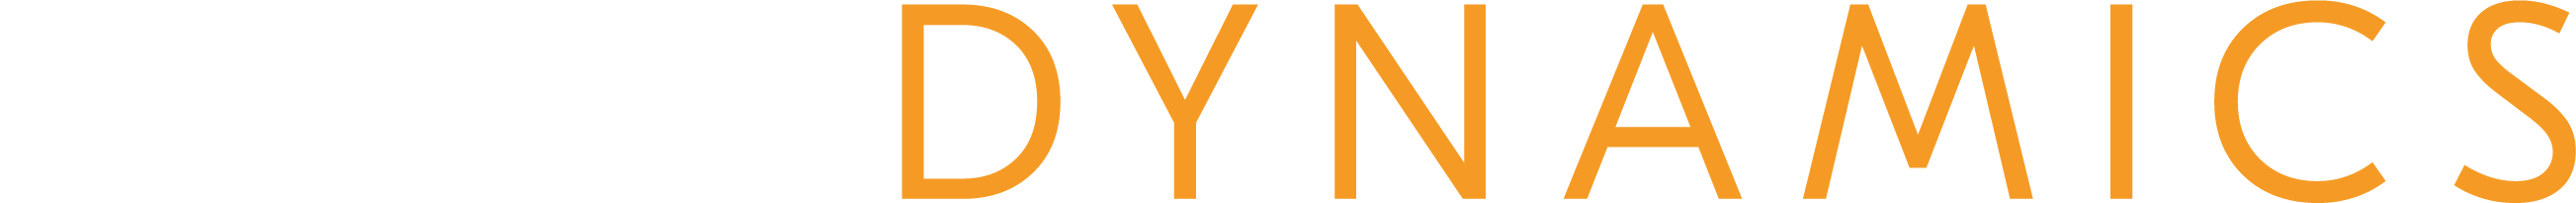 Baya Dynamics logo